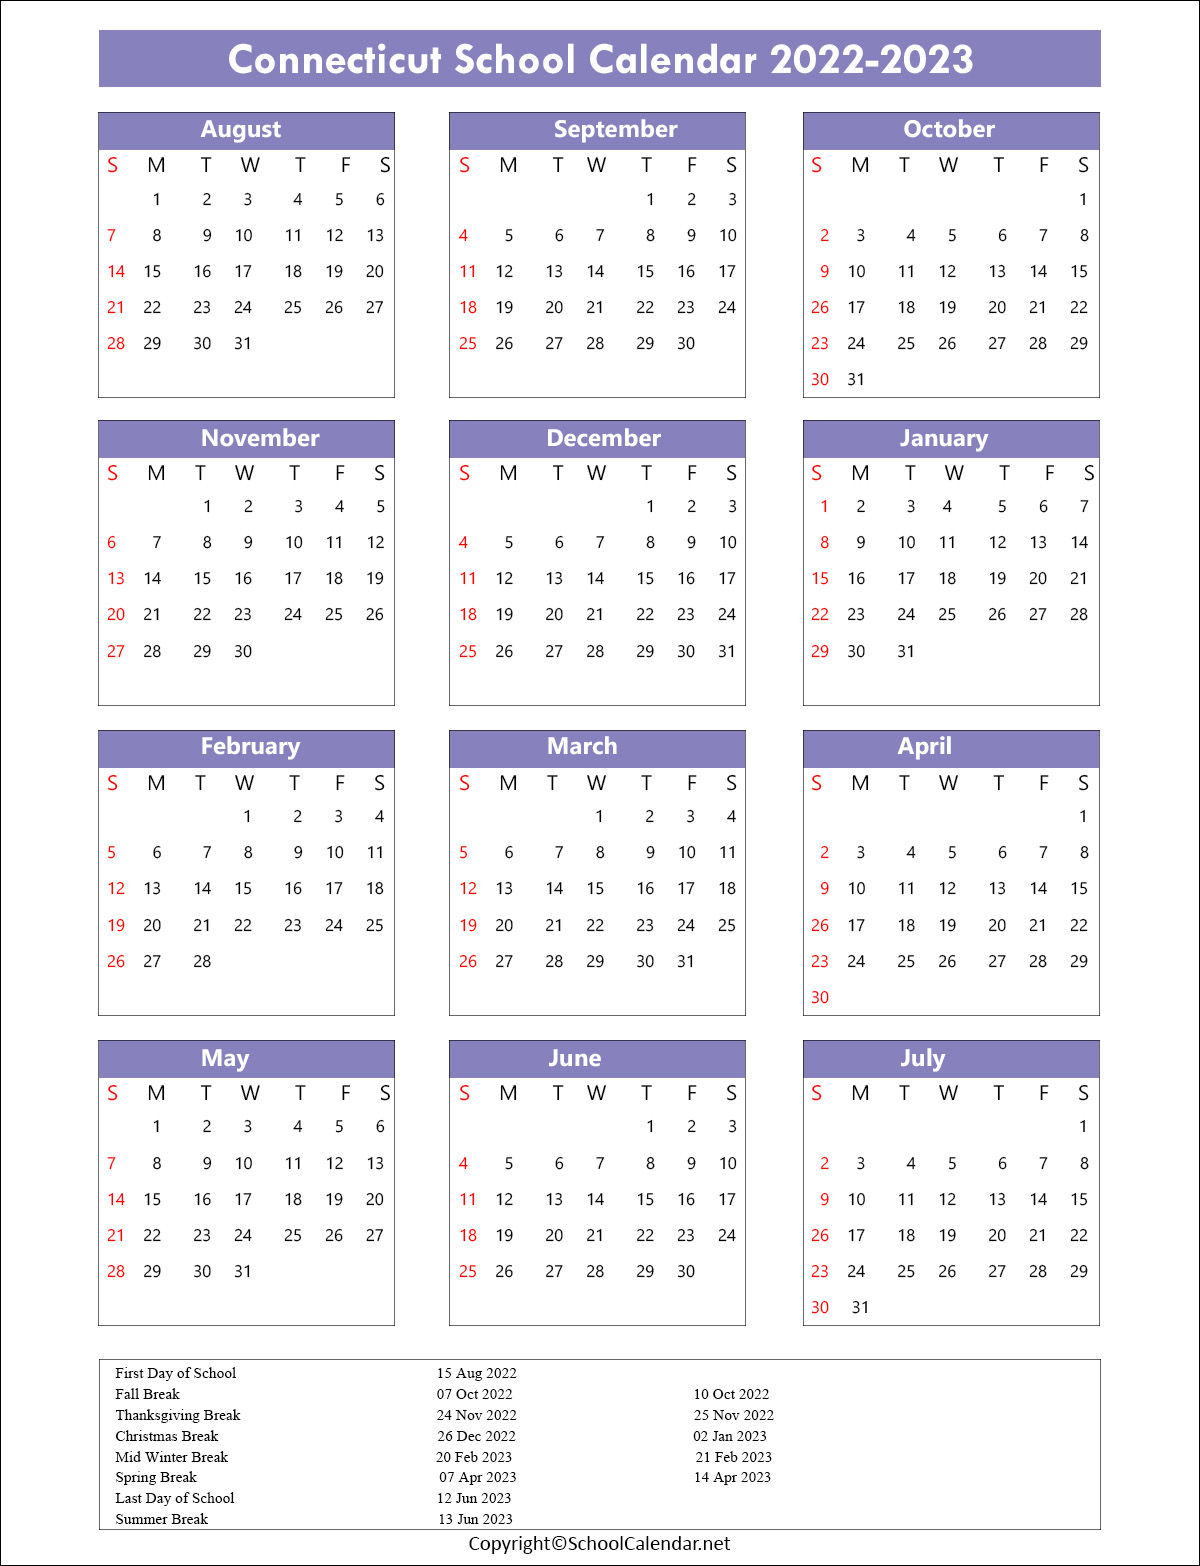 Connecticut School Calendar 2022